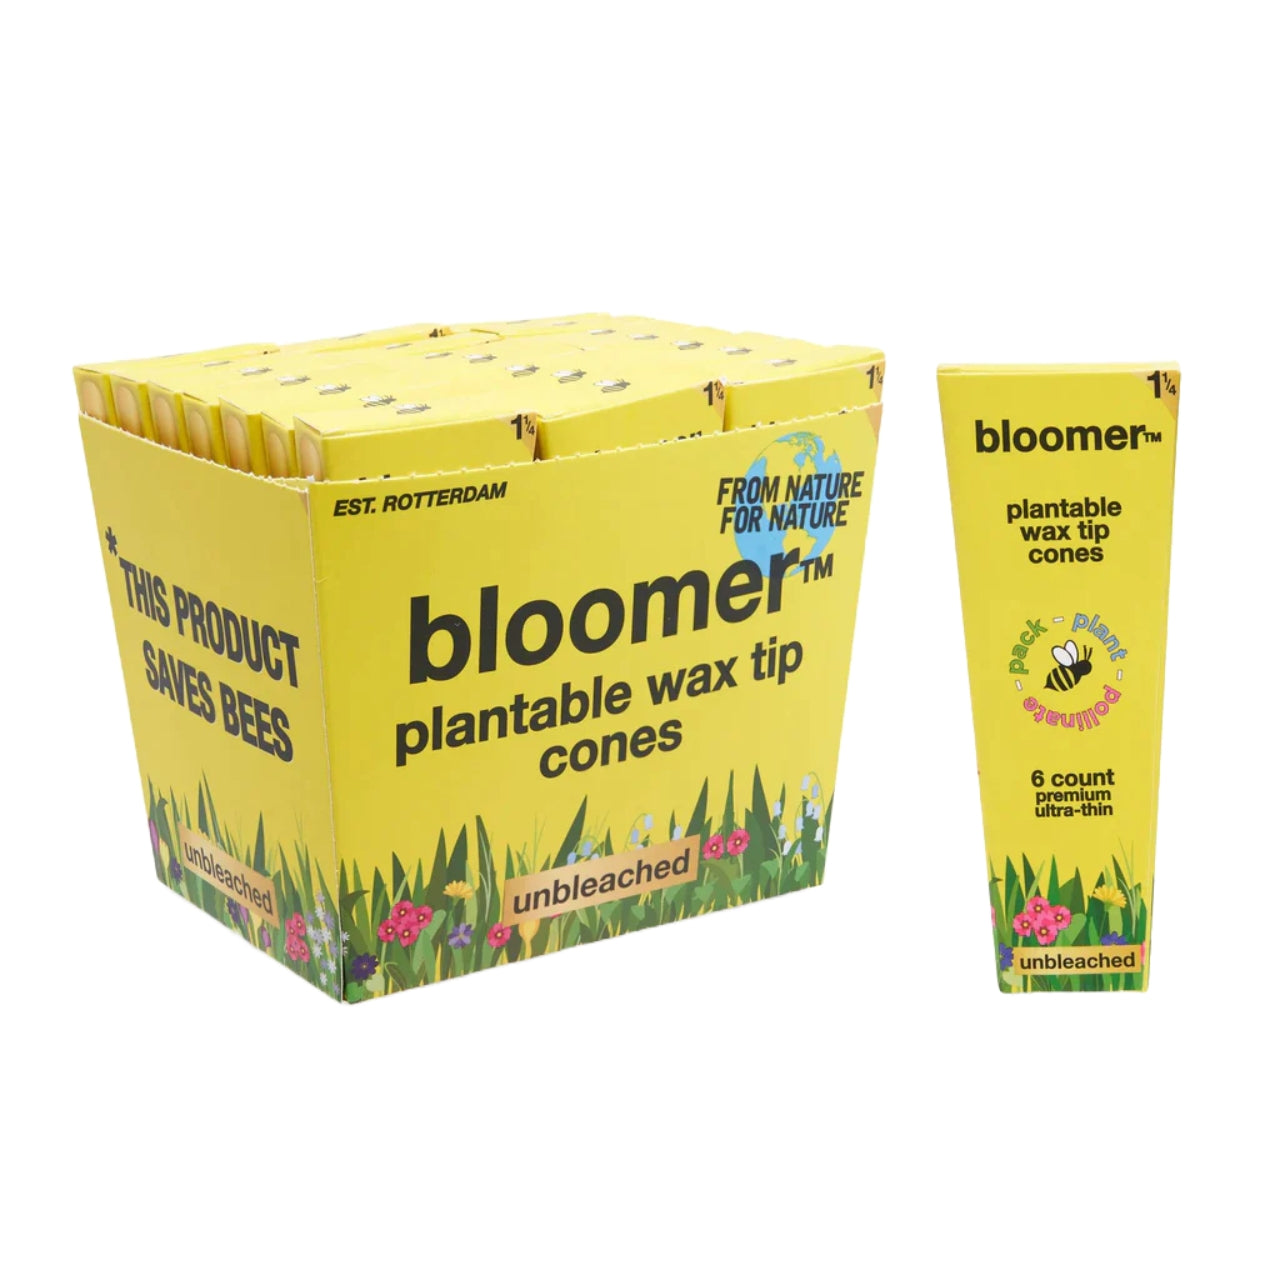 bloomer plantable wax tip cones